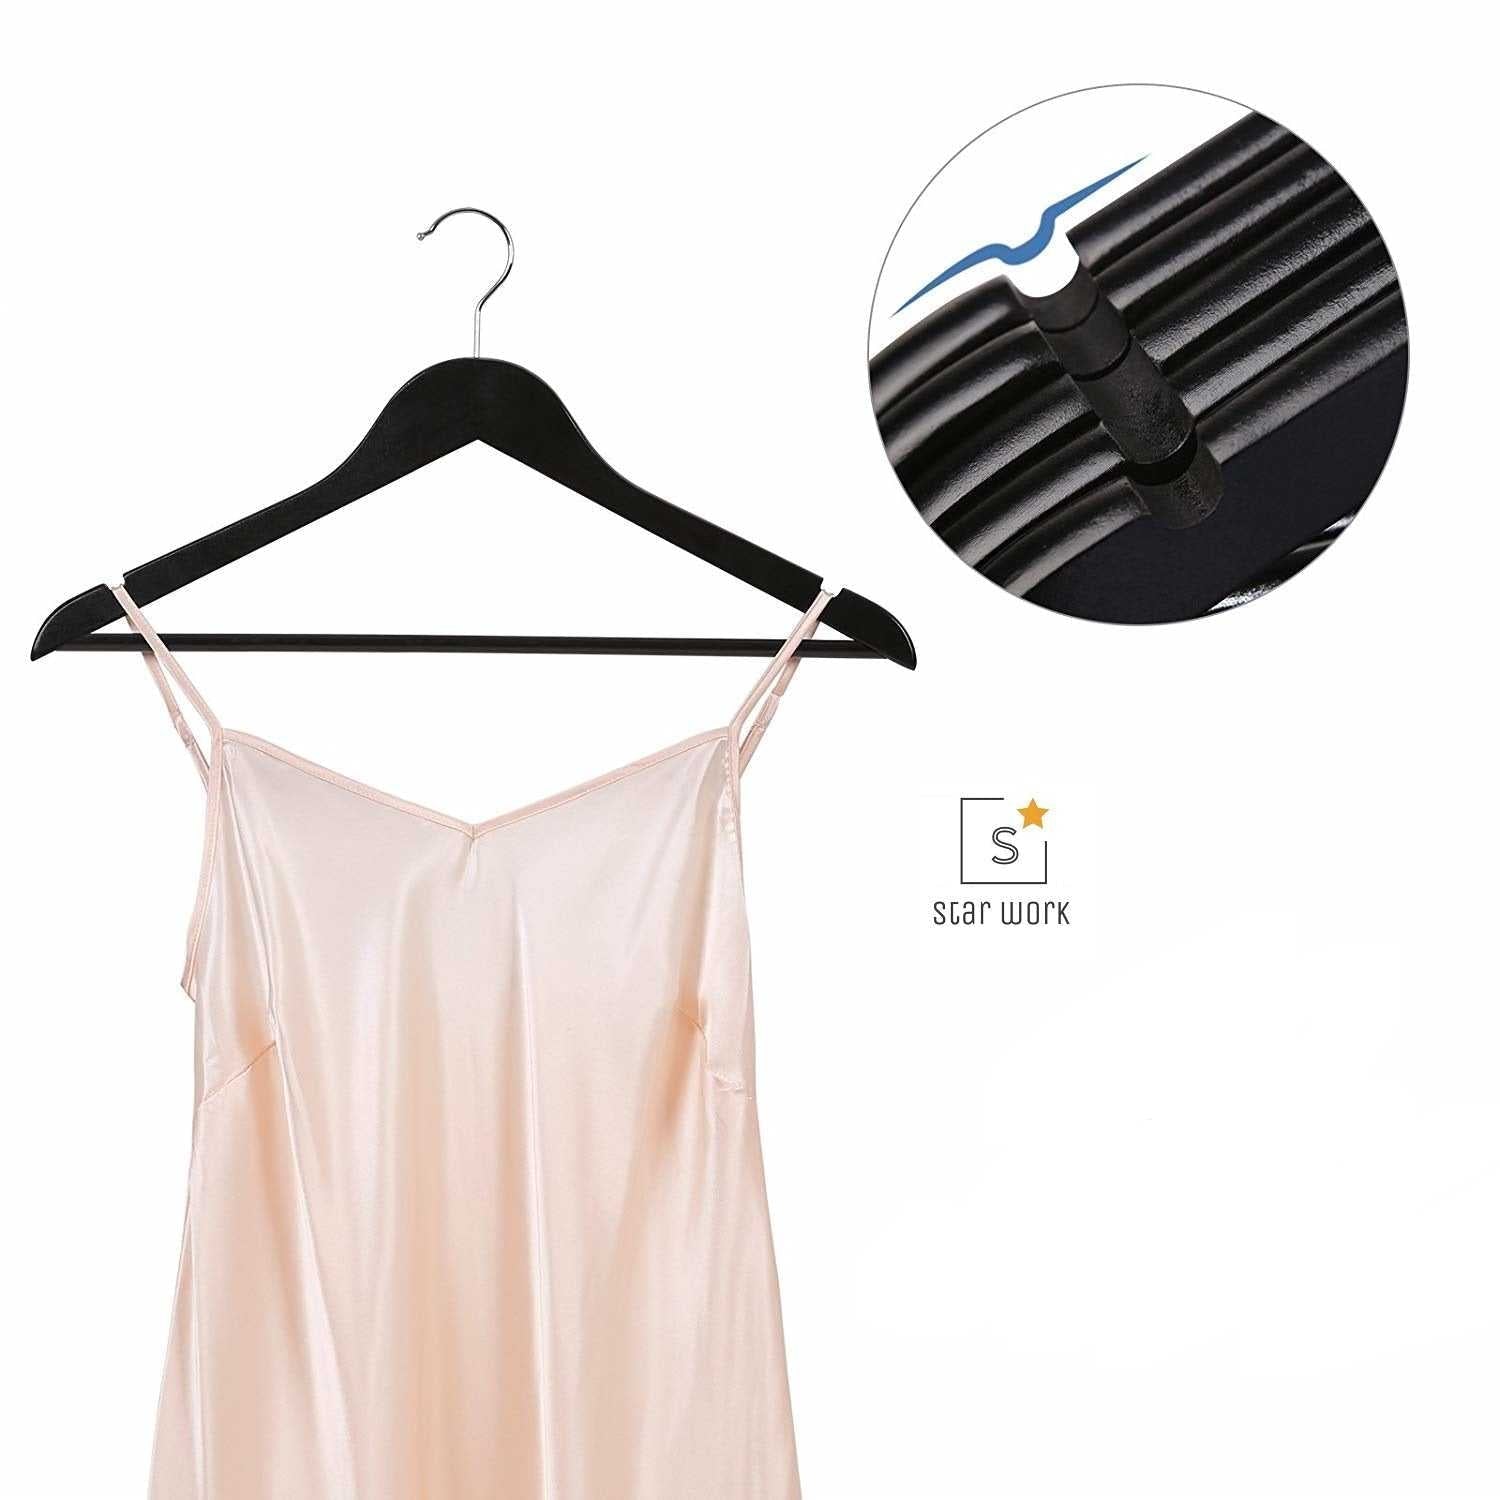 Multi Functional Solid Wooden Suit Hangers | Hanger With Non-slip